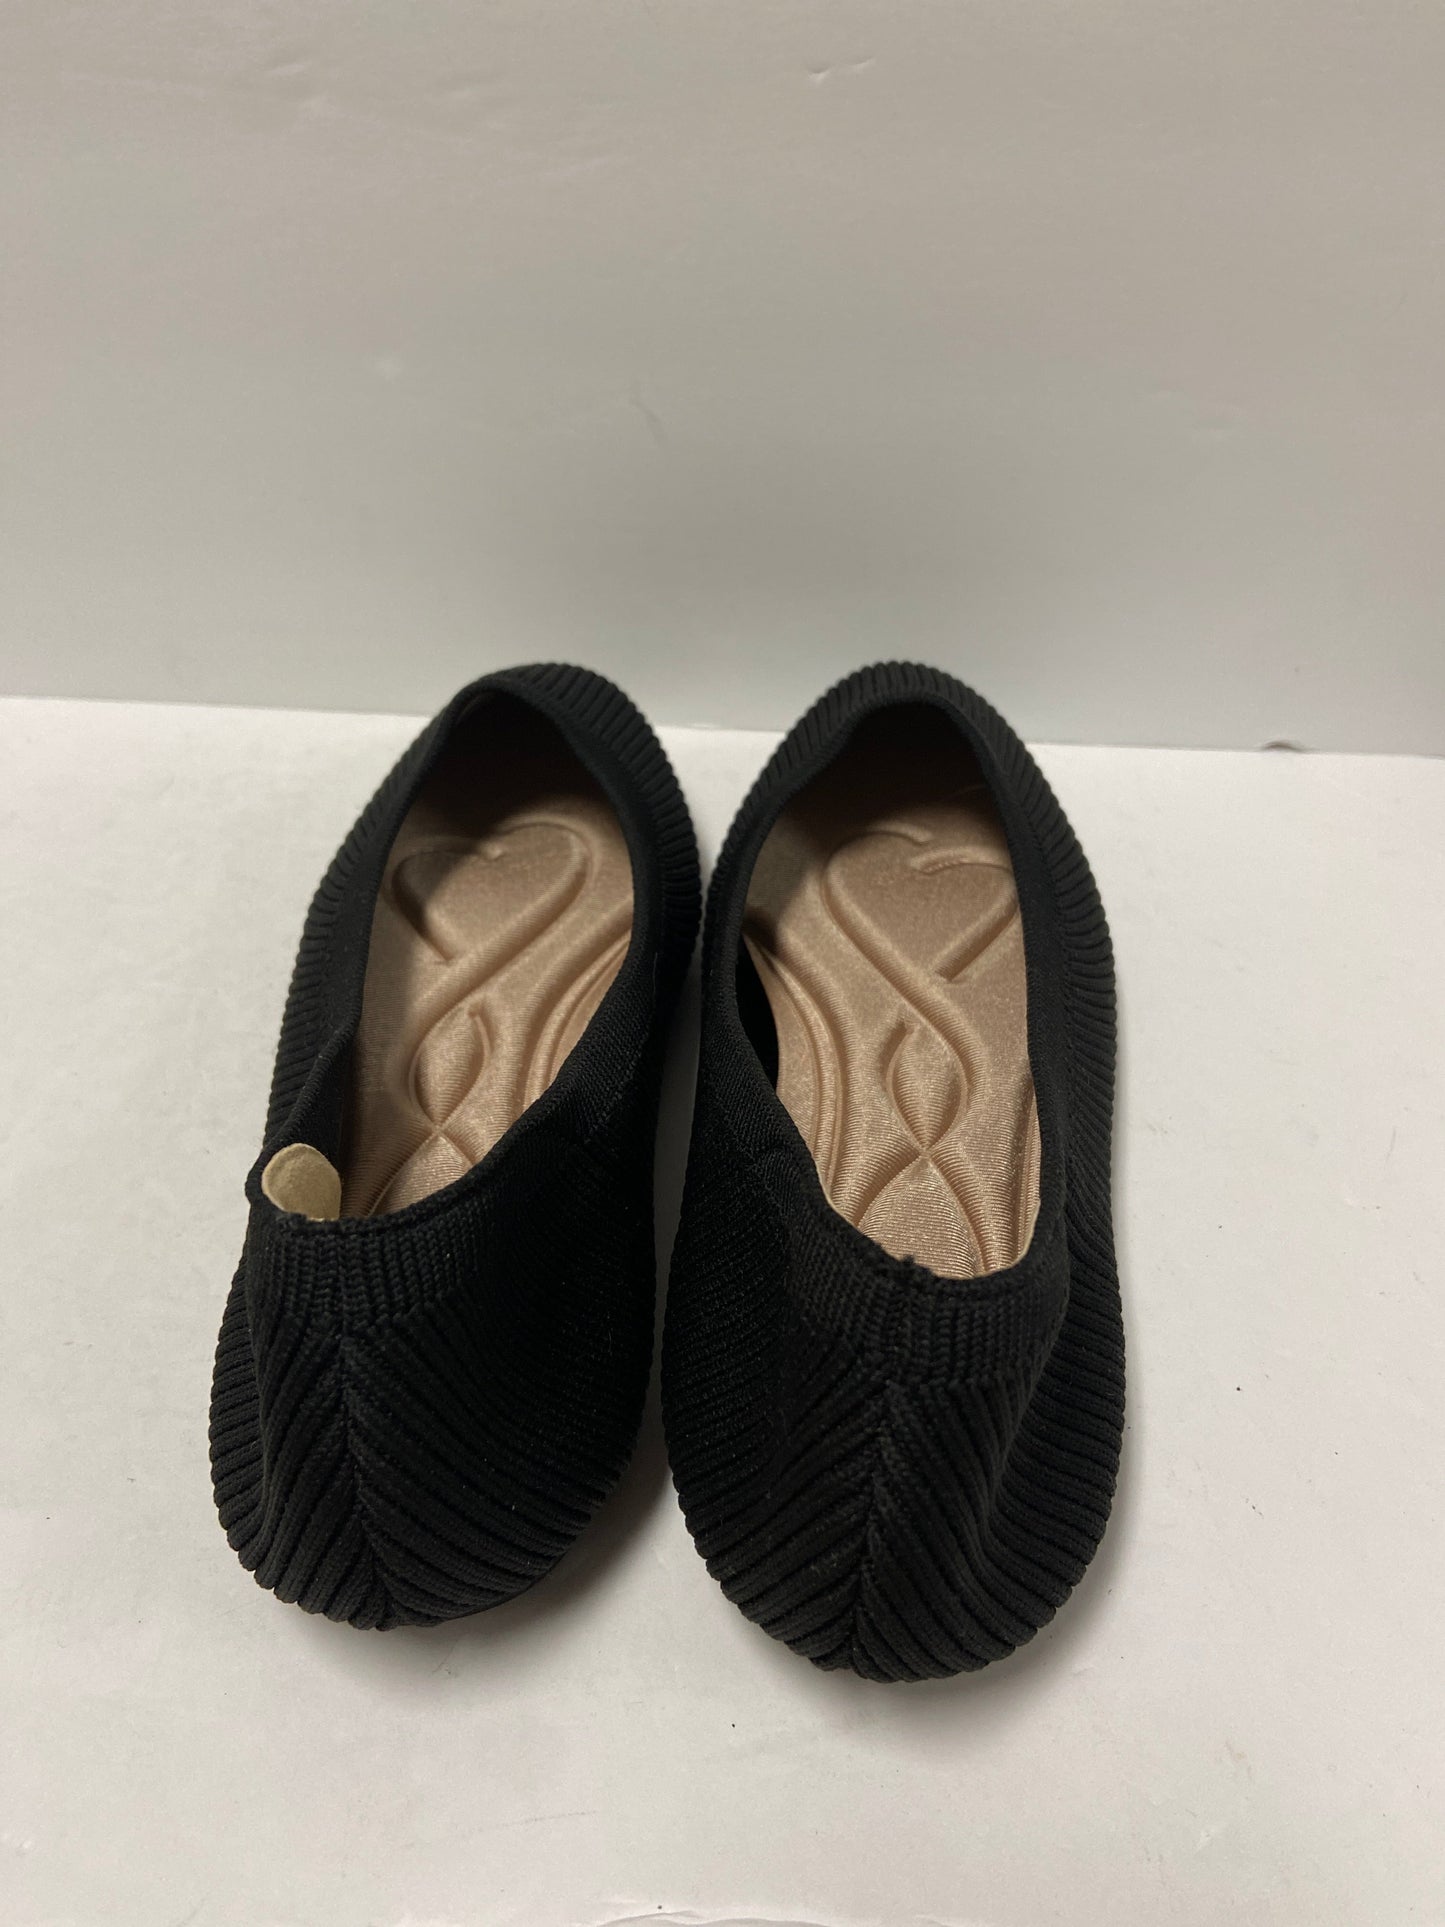 Black Shoes Flats Clothes Mentor, Size 10.5